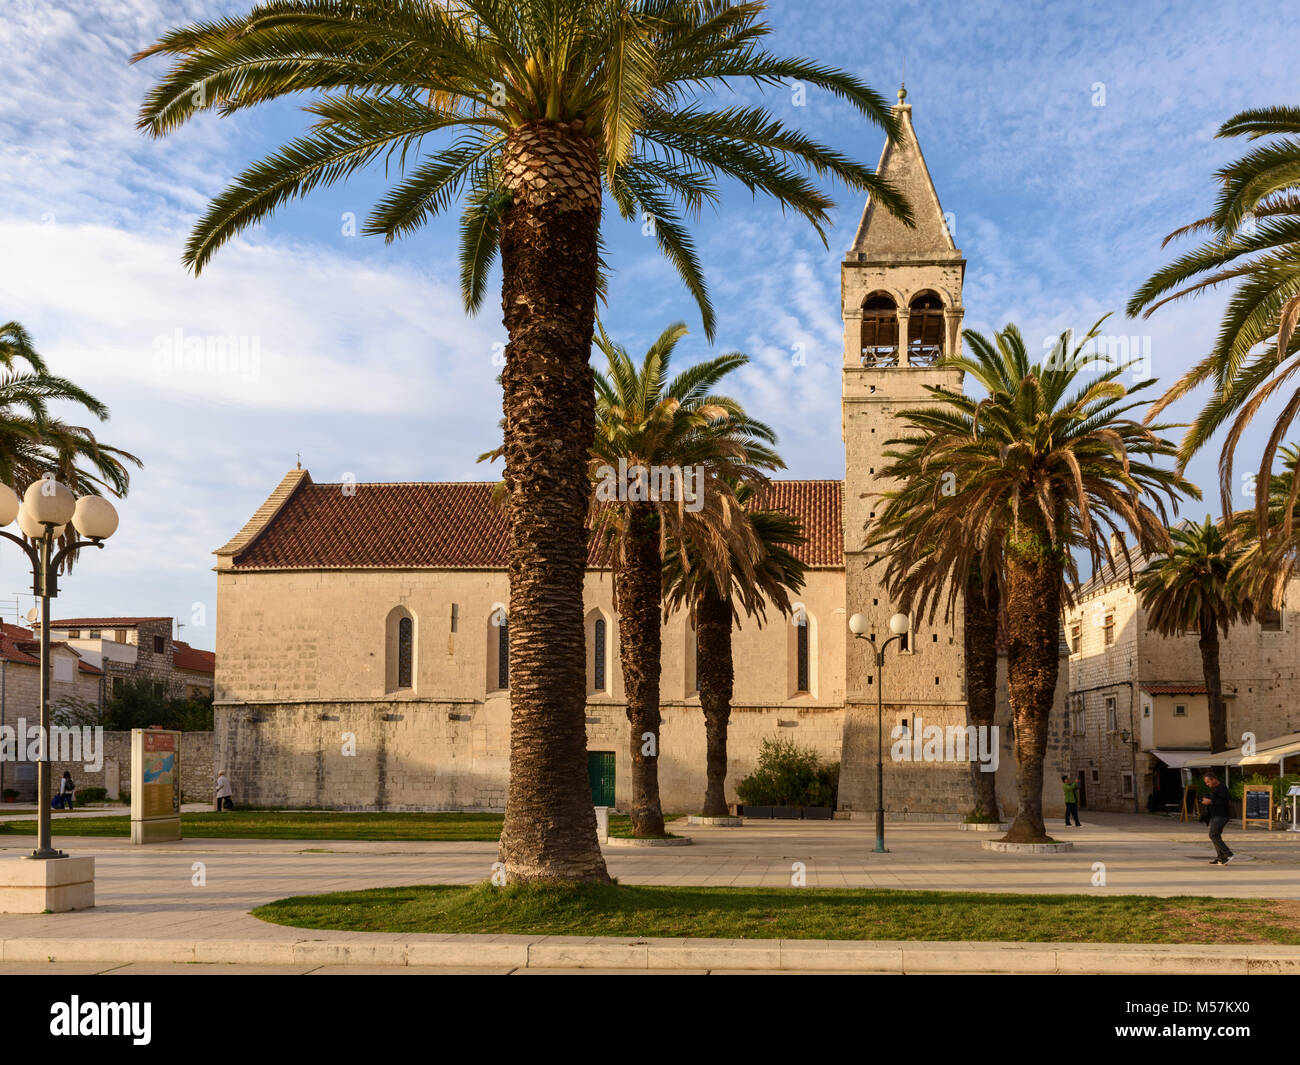 Church of St. Dominic, Trogir, Croatia Stock Photo